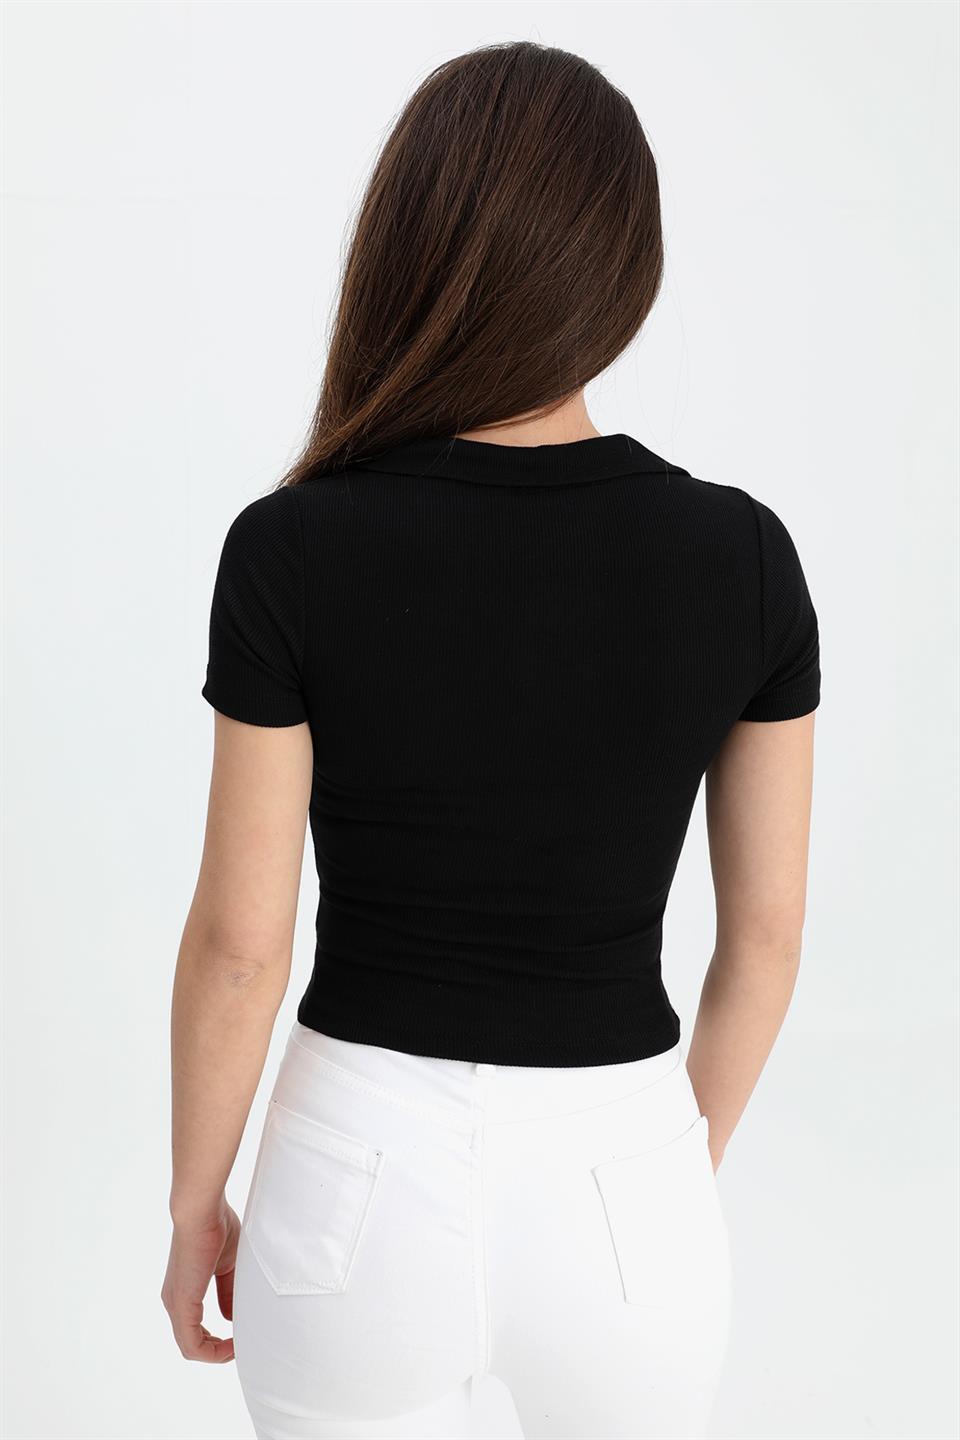 Women's Blouse Shirt Collar Short Sleeve Camisole - Black - STREETMODE™